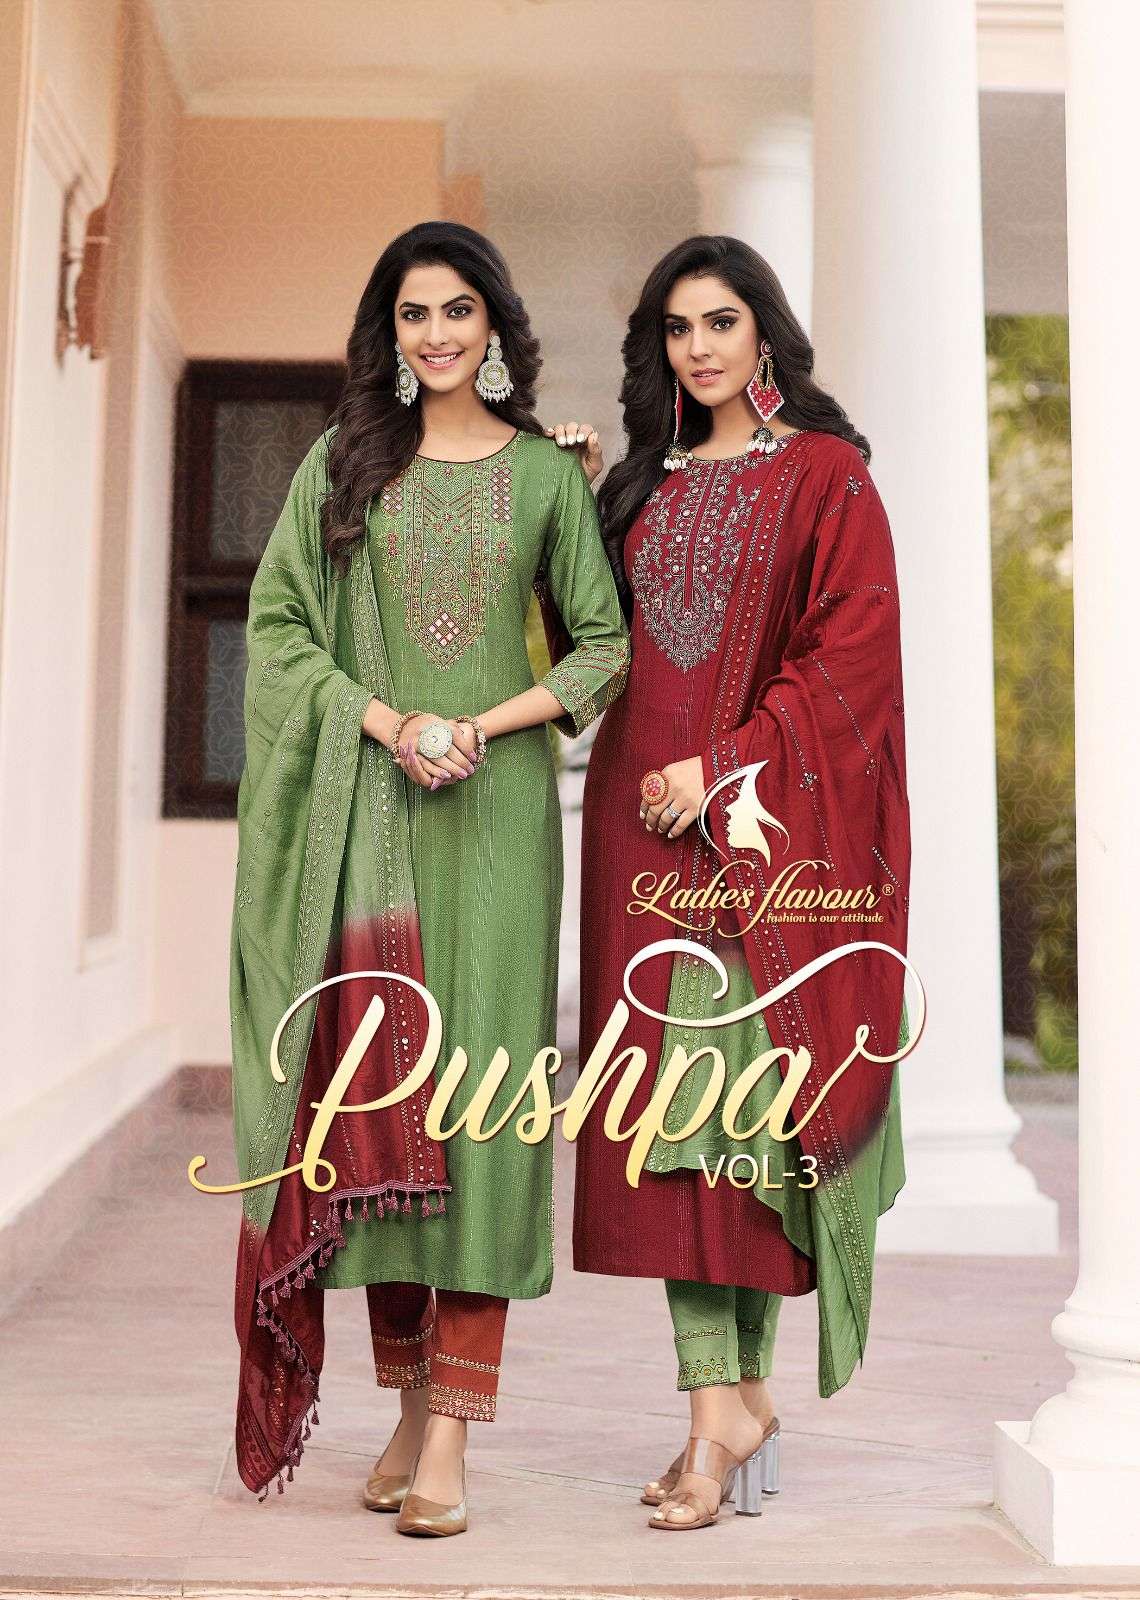 ladies flavour pushpa vol-3 3001-3006 series trendy designer top bottom with dupatta latest catalogue surat